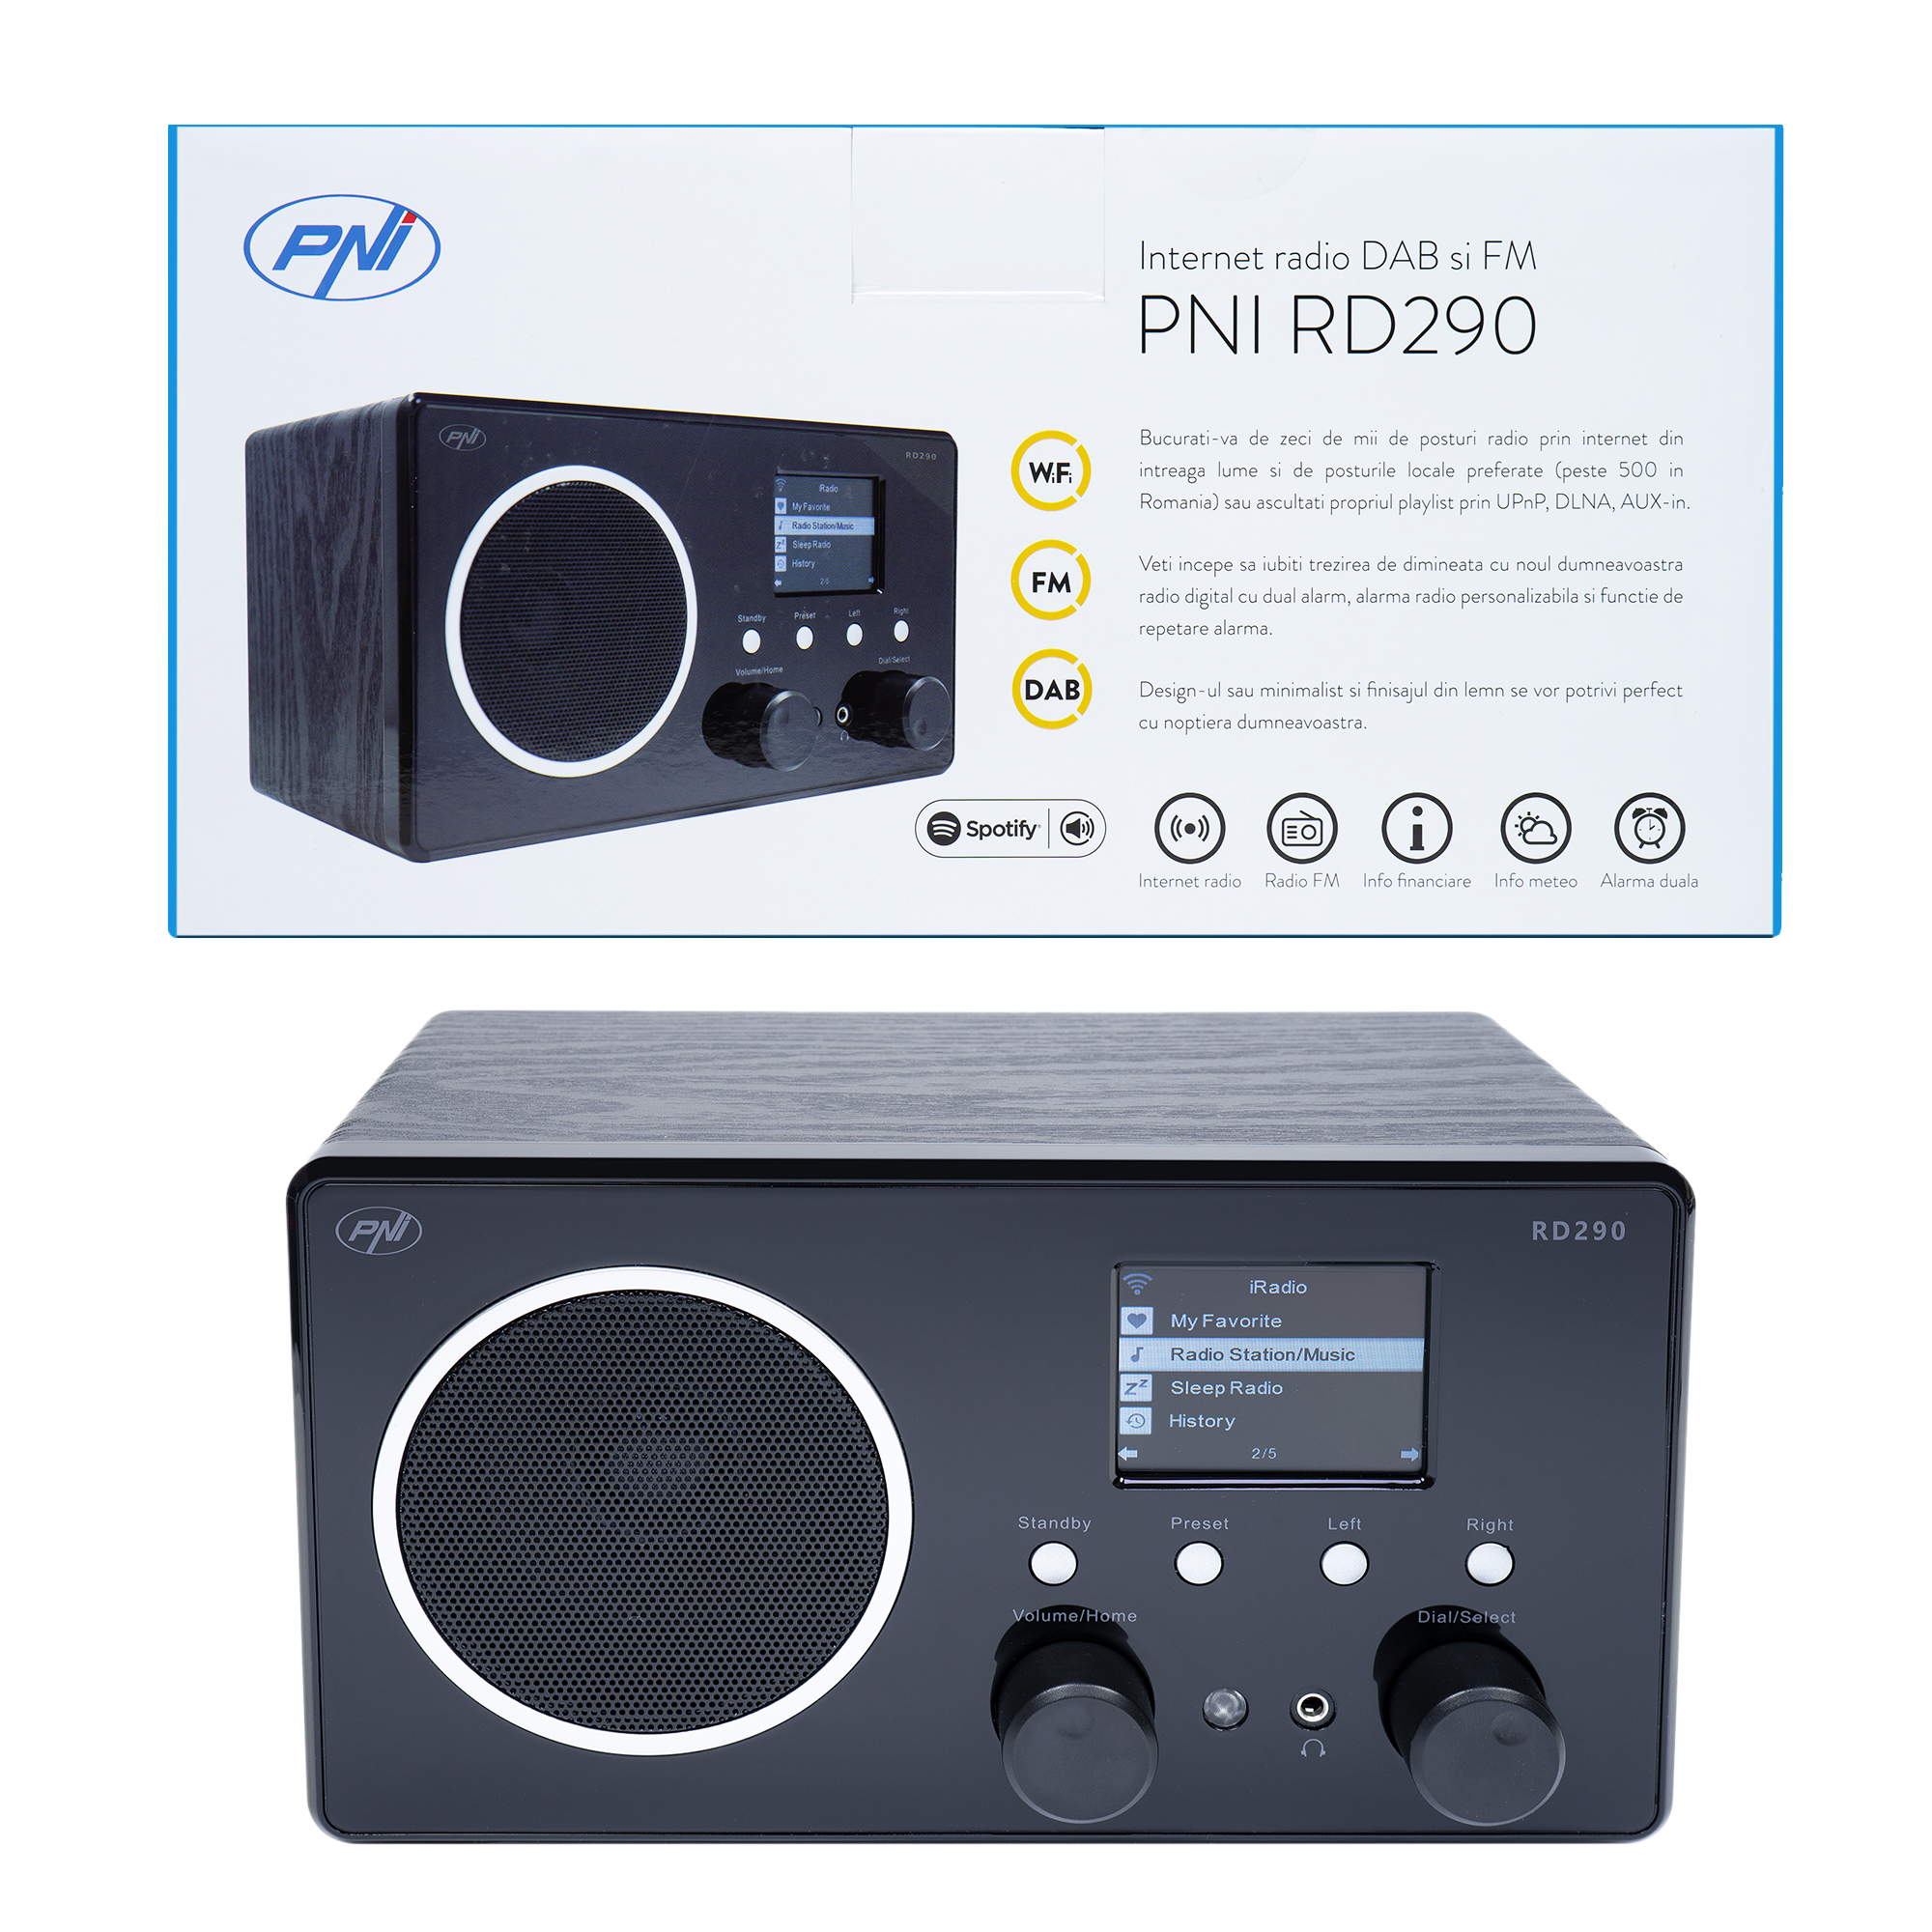 Internet radio DAB si FM PNI RD290 prin Wi-Fi, analog FM, Spotify Connect, APP Air Music Control, DLNA si UPnP, Dual Alarm, AUX-in 3.5, Line-out 3.5, ecran color 2.4 inch image12